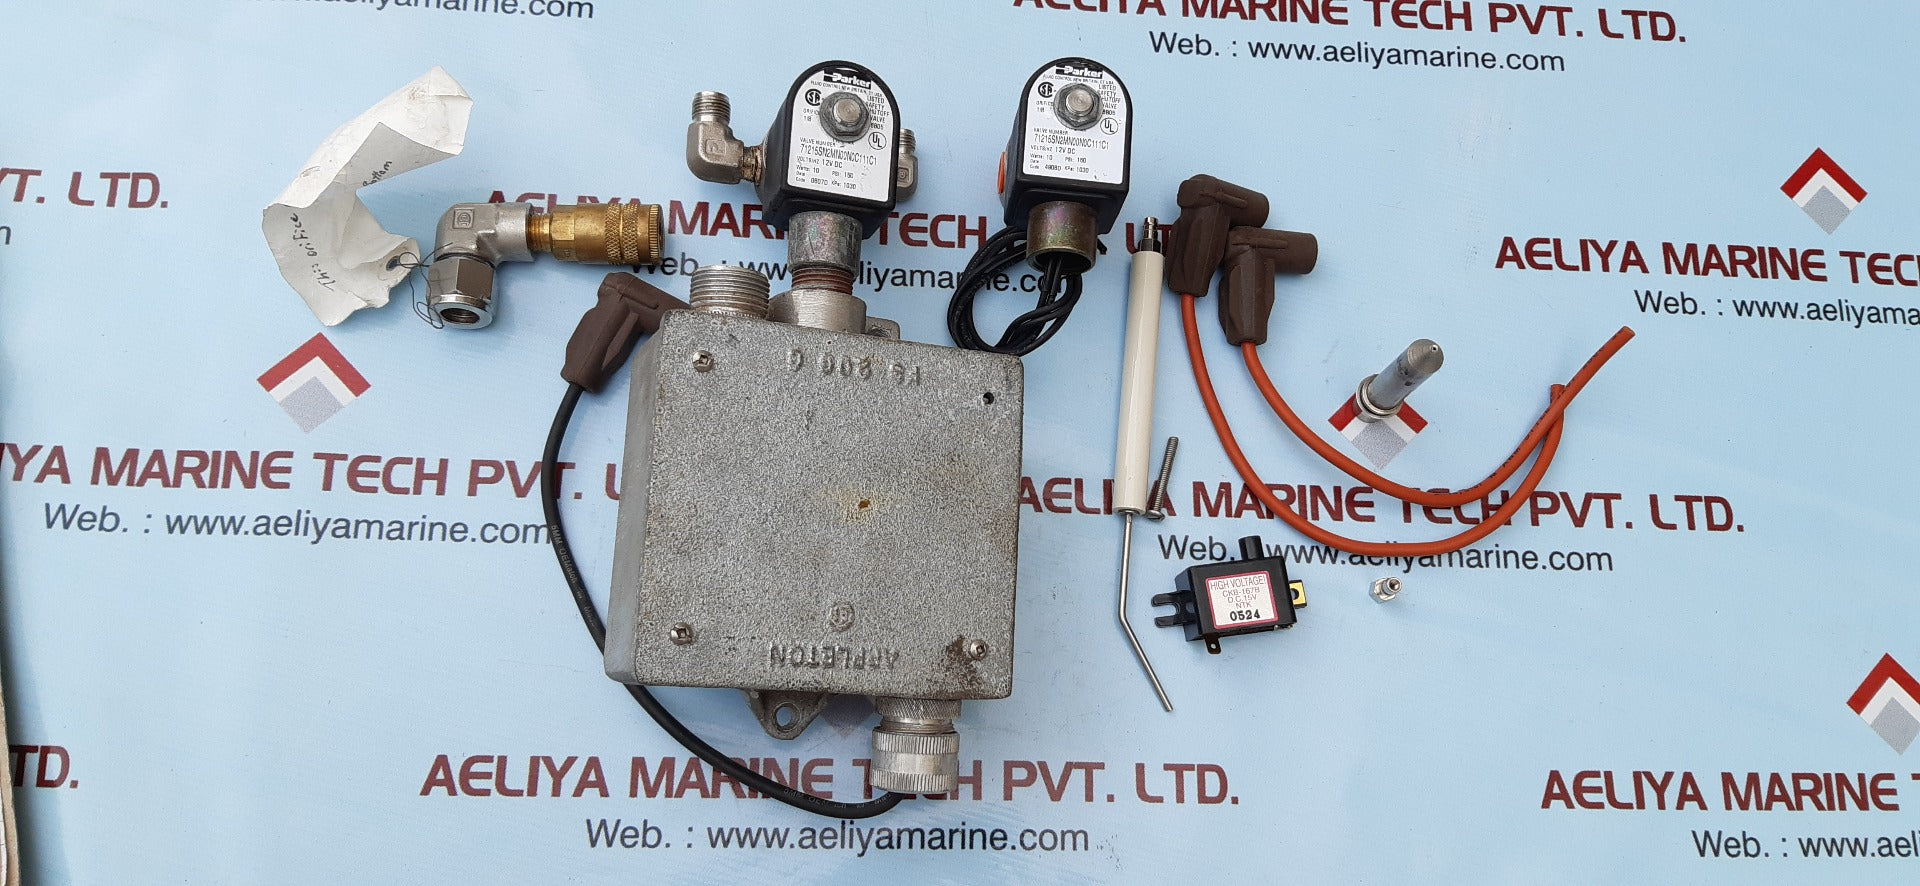 Parker 71215sn2mn00n0c111c1 solenoid valve kit 10w 150psi